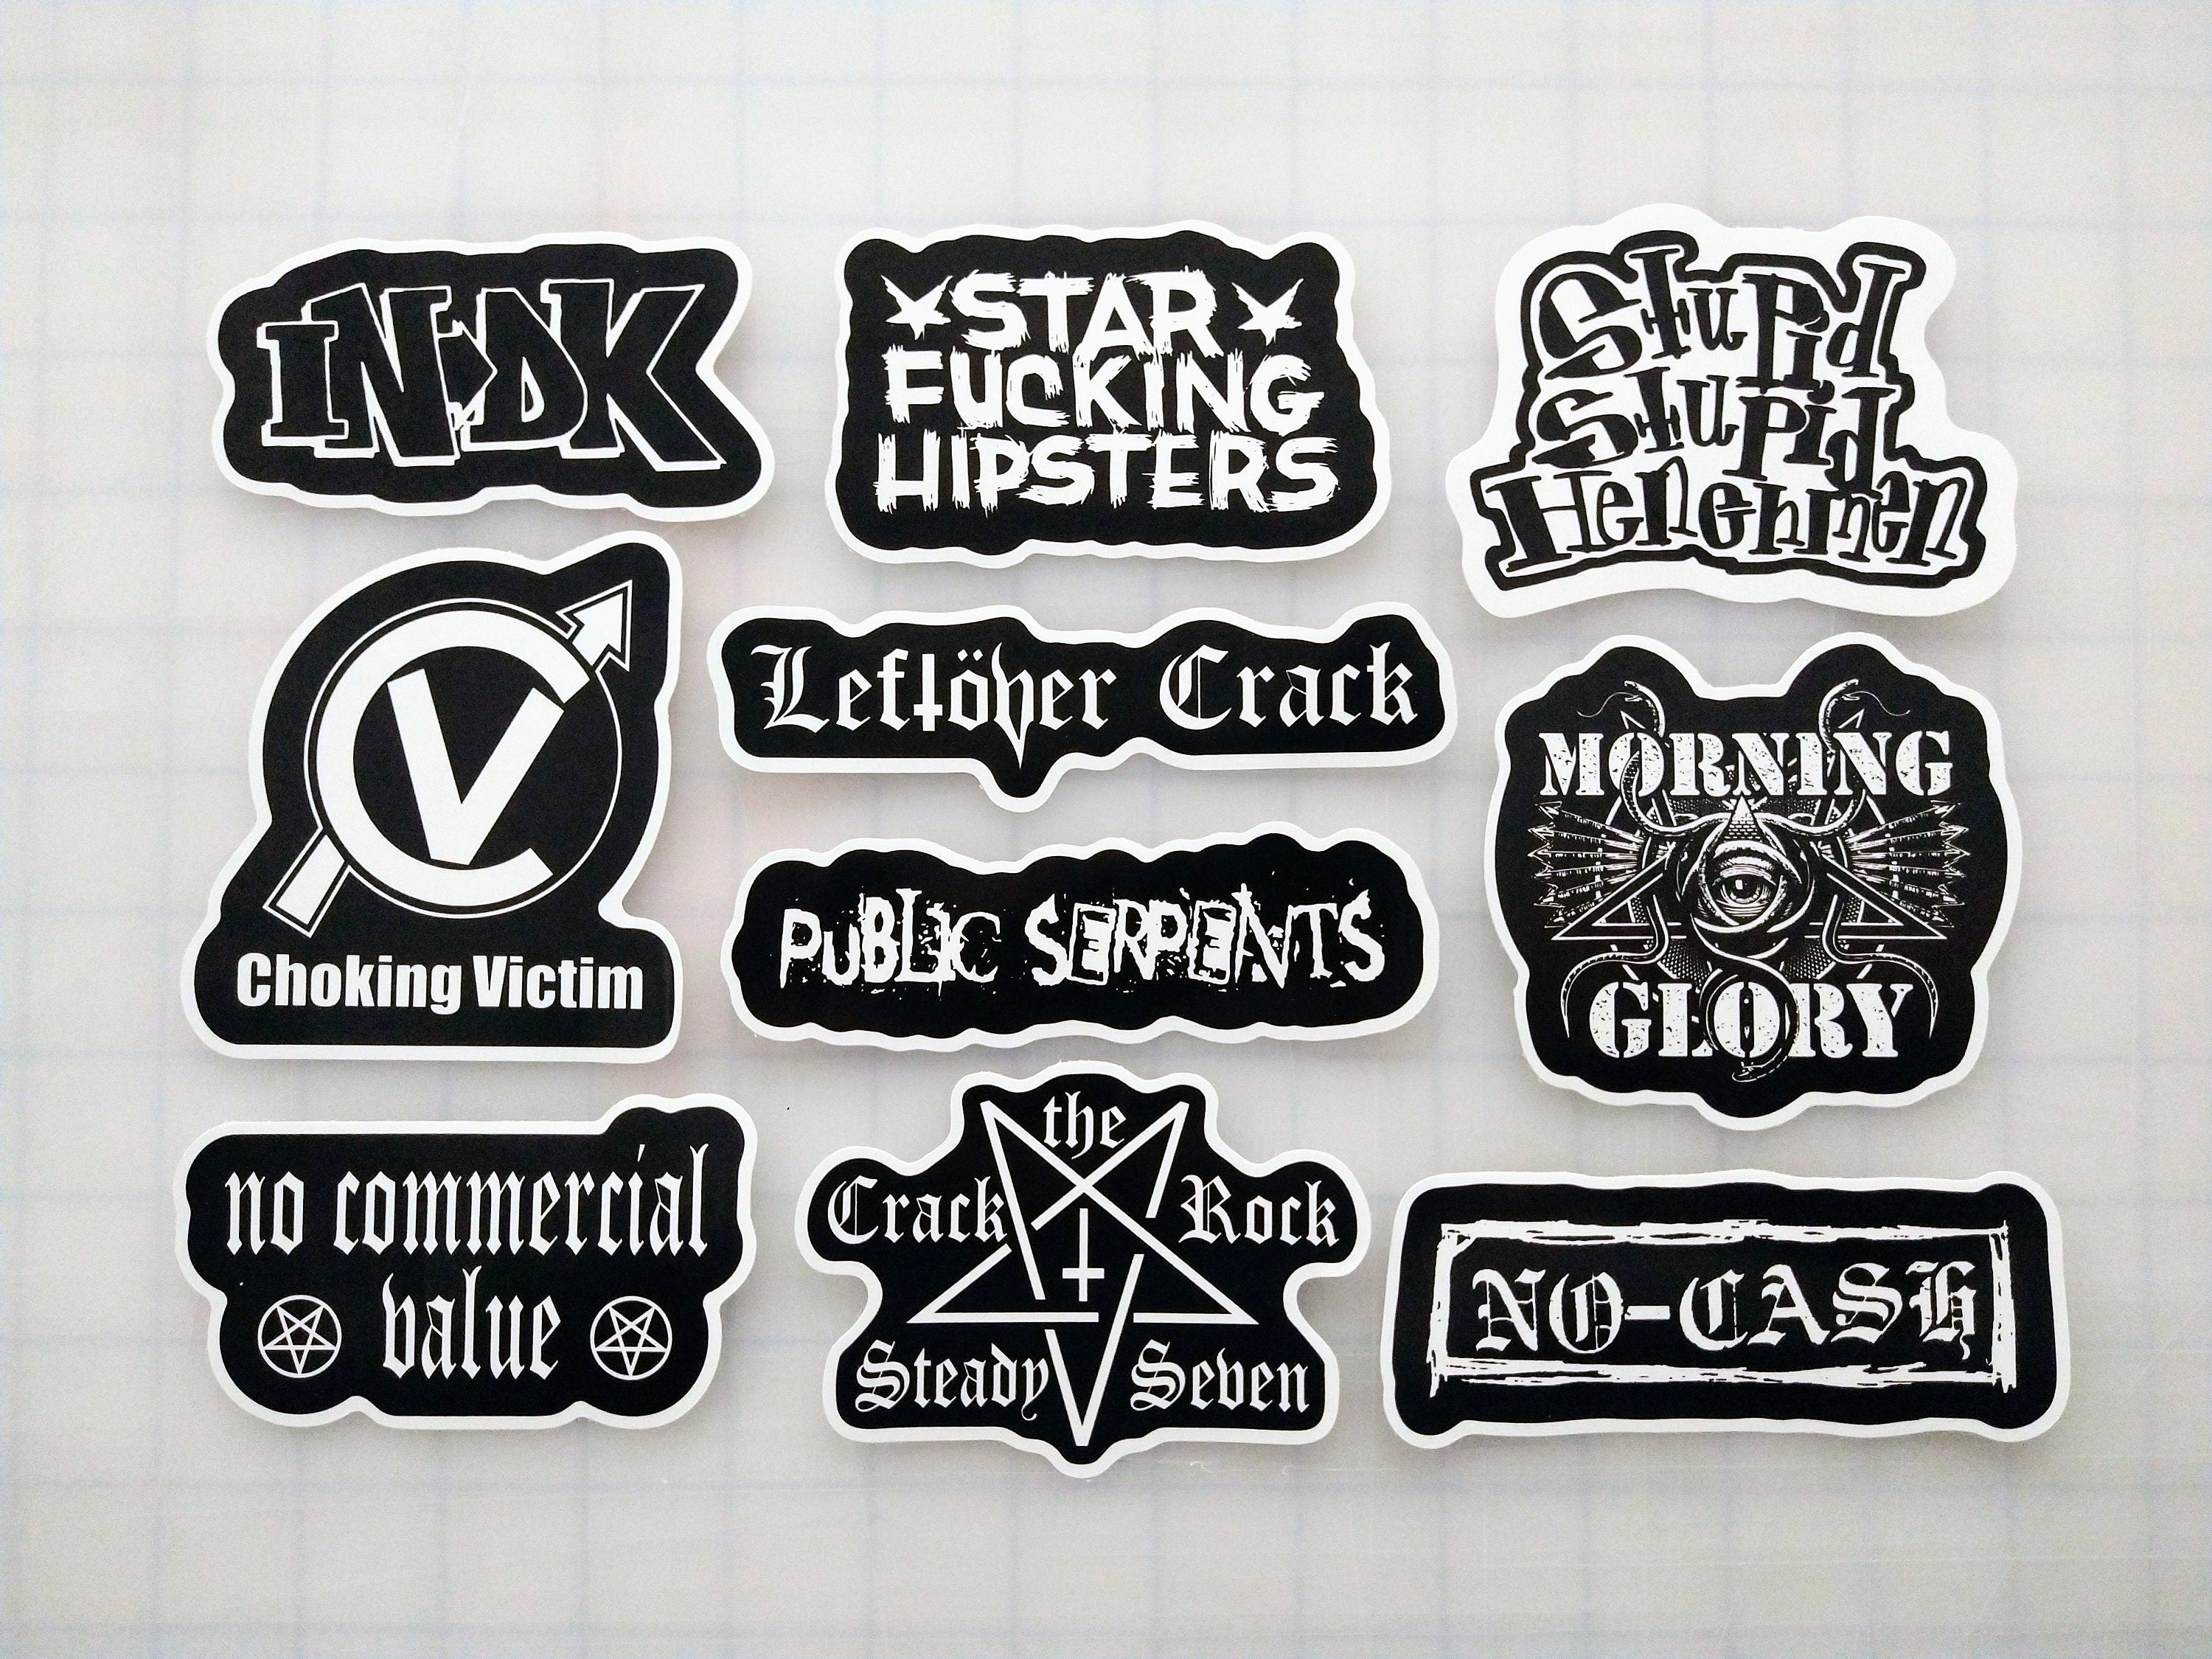 Crack Rock Steady / Ska-Punk Sticker Pack (10 Stickers)